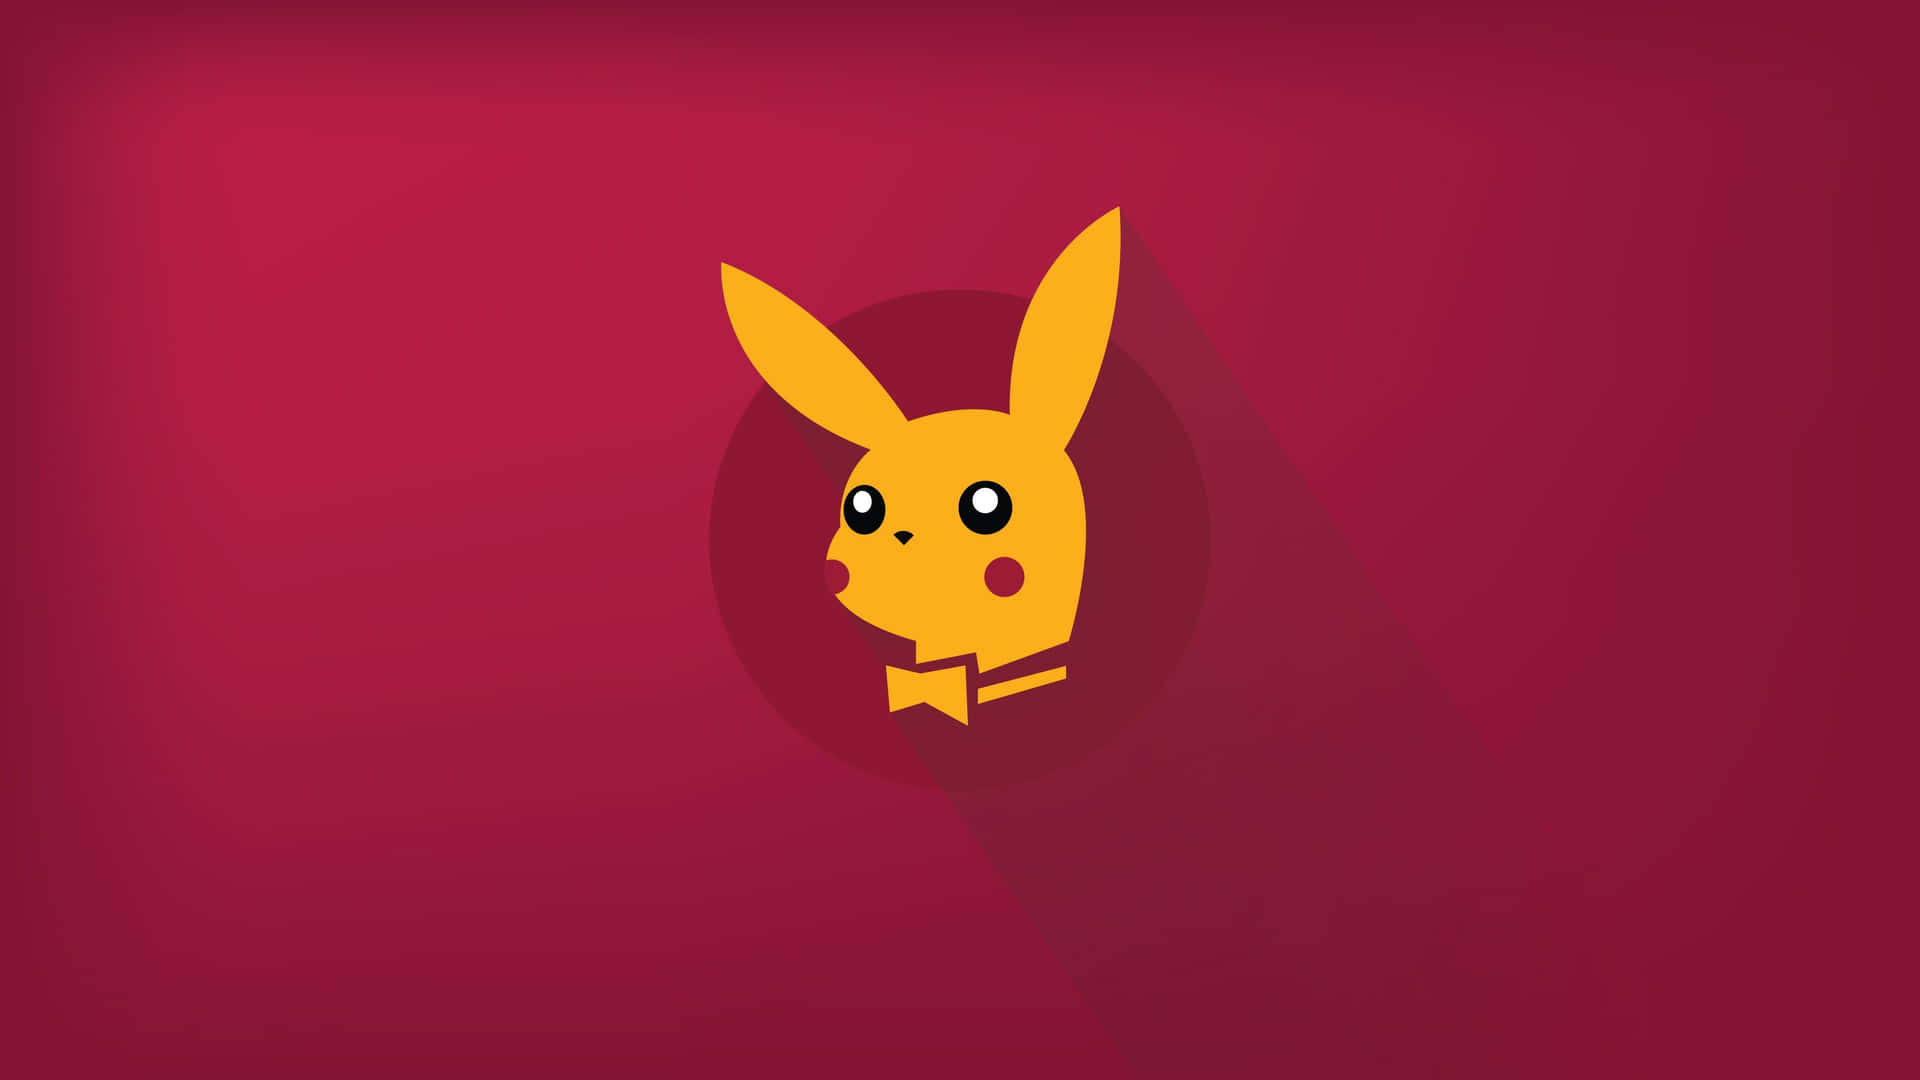 Cute Playboy Pikachu Pokemon Aesthetic Wallpaper